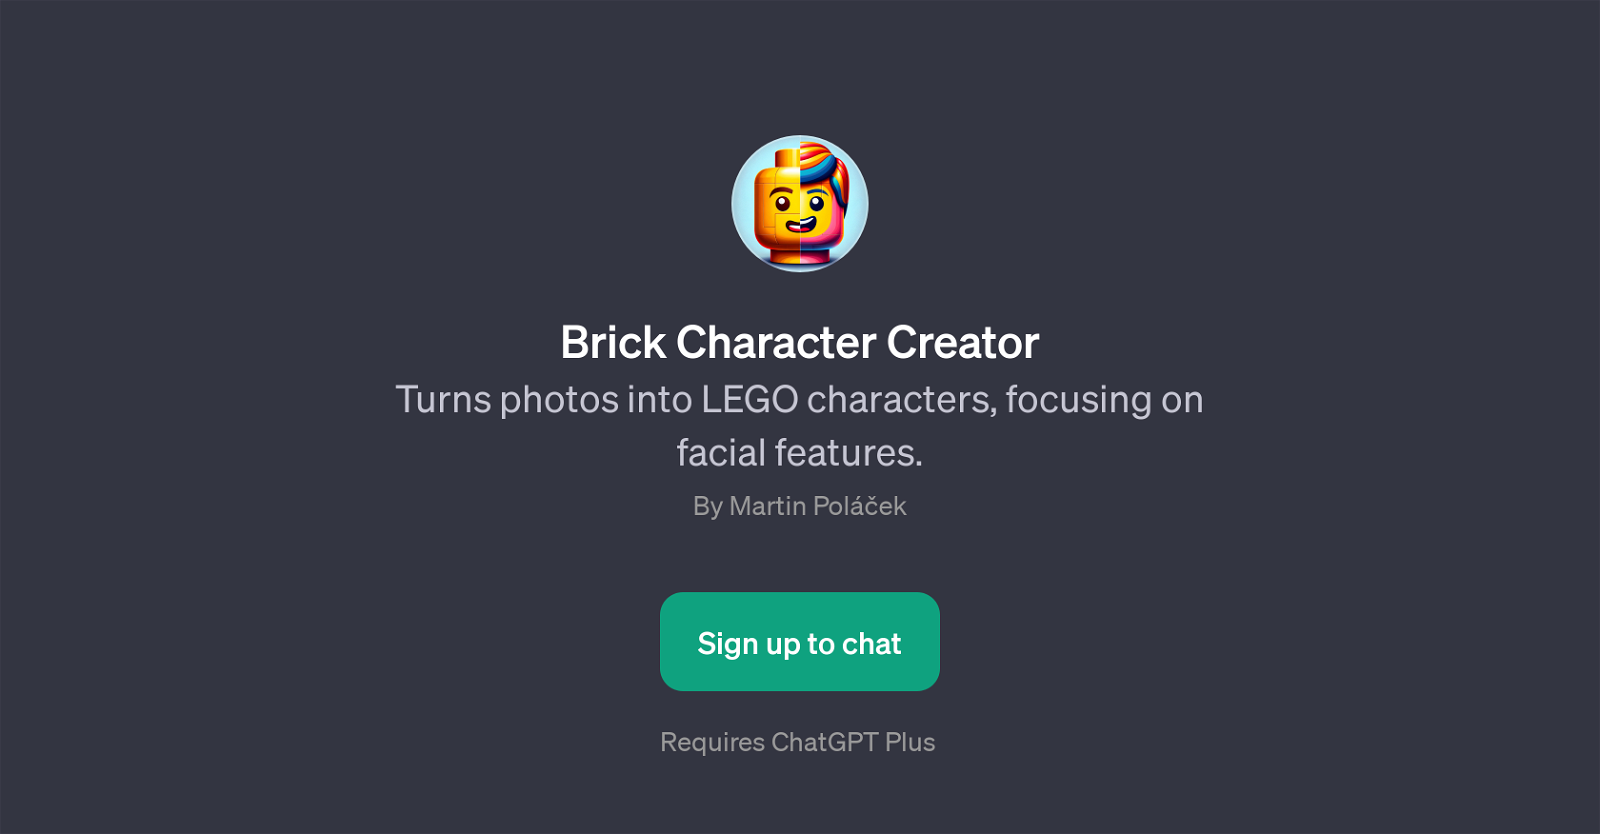 Brick Character Creator website